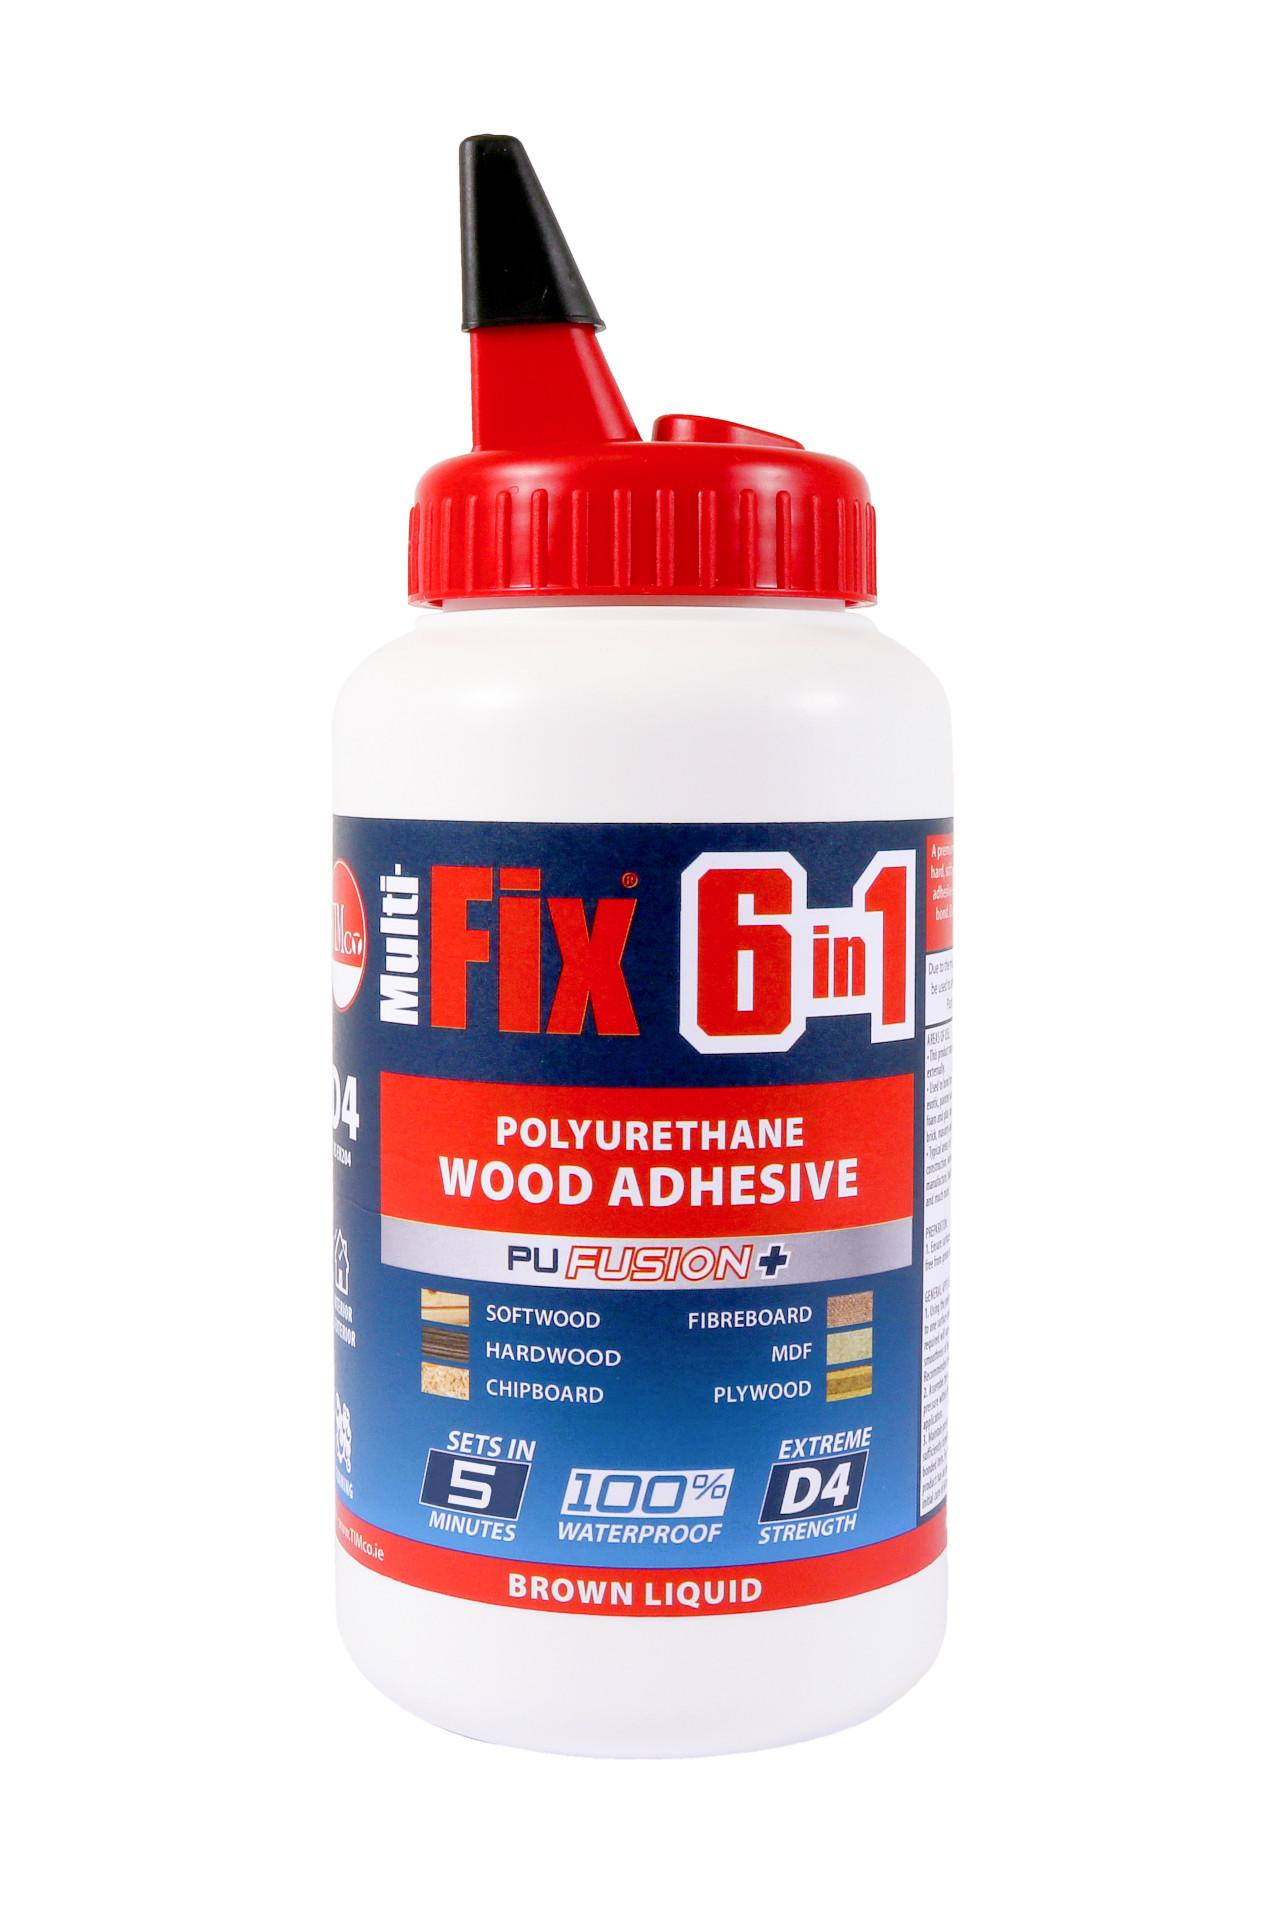 Multi-Fix 6 in 1 PU Wood Adhesive 750g - 5 Minutes